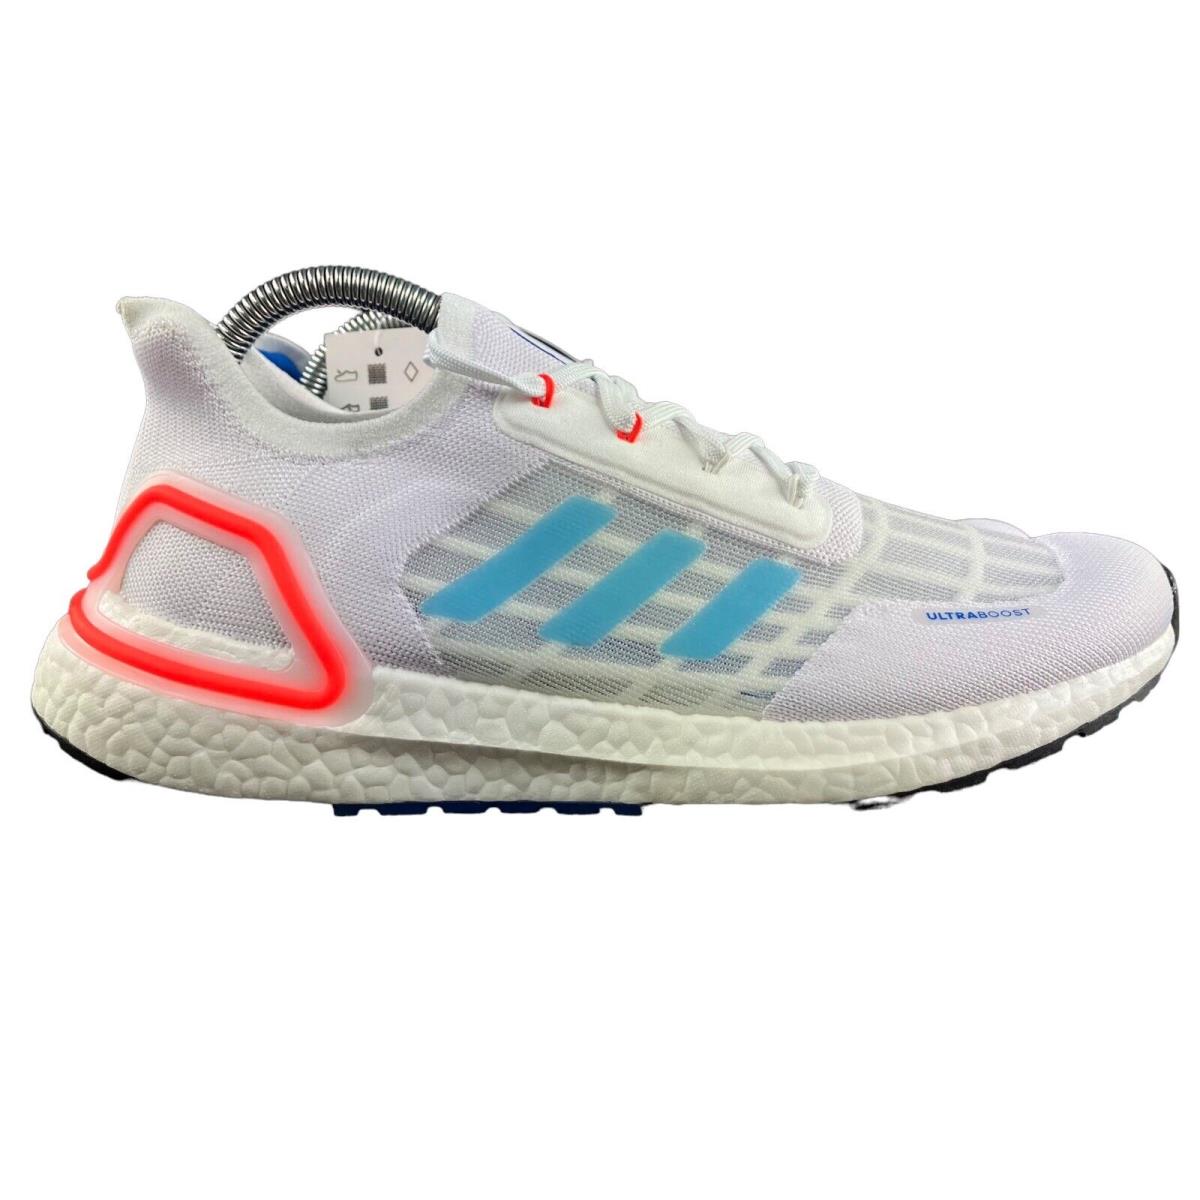 Adidas Men`s Ultraboost S.rdy White Blue Orange Running Shoes FY3470 Sz 8 - 9 - White